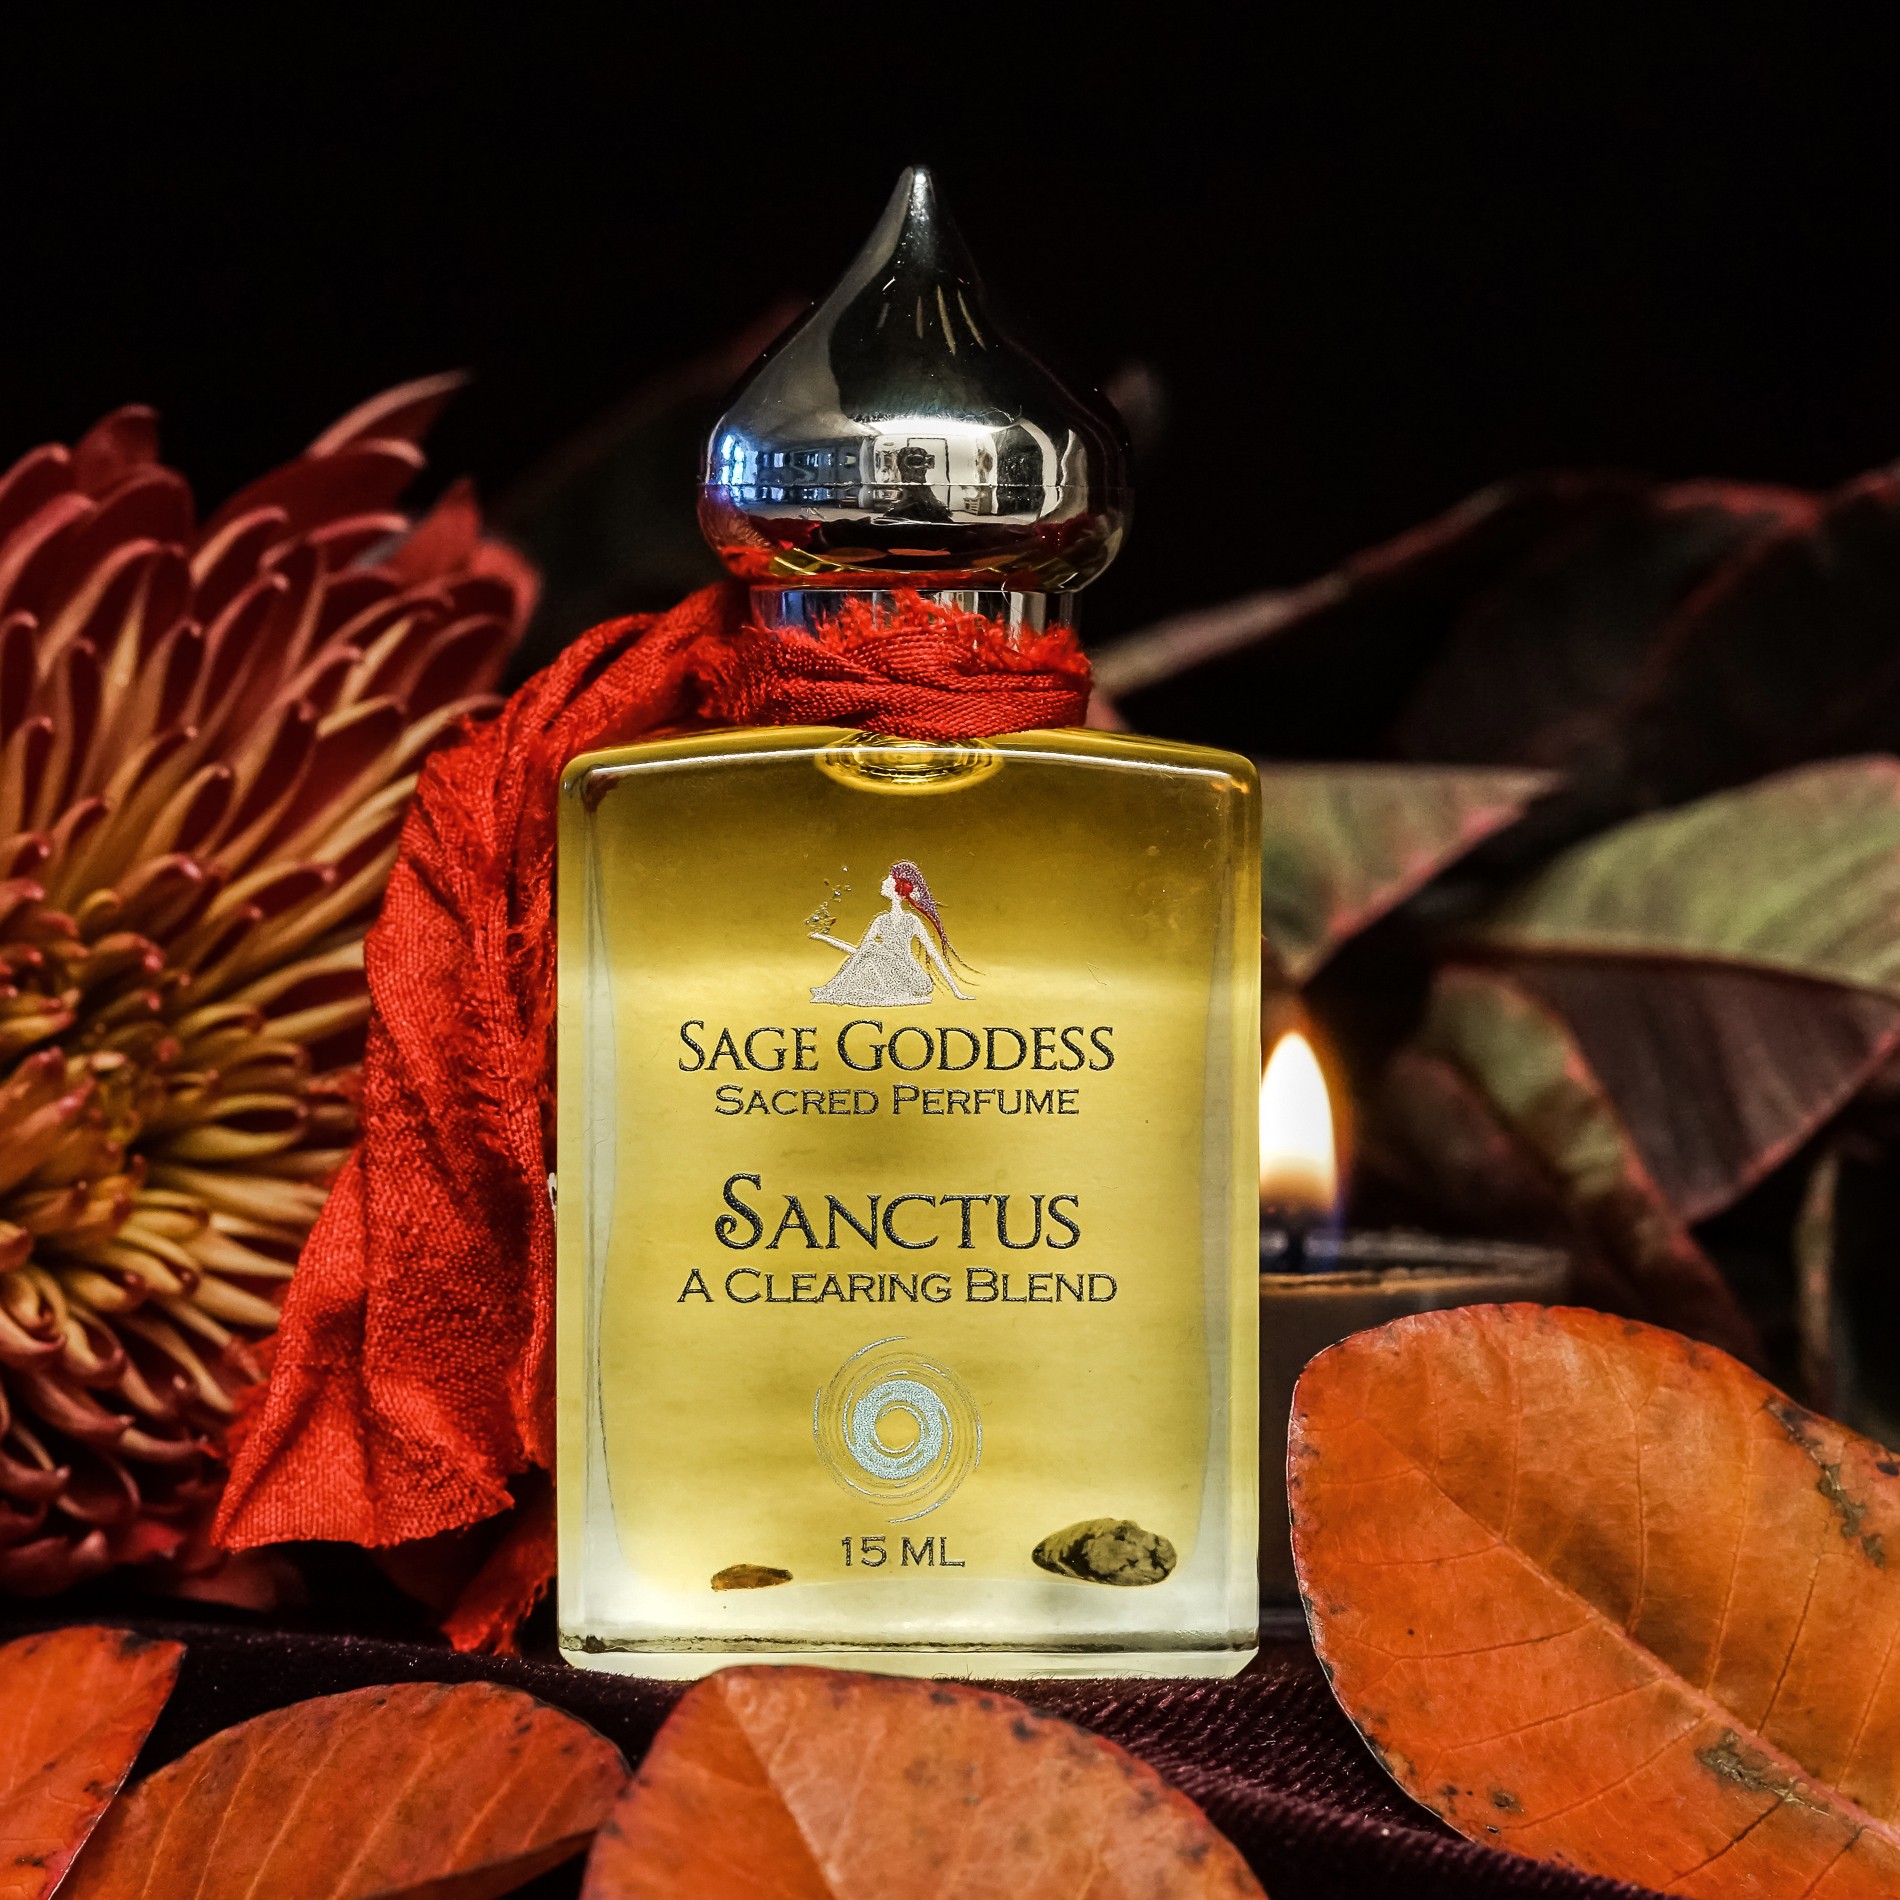 Sanctus perfume